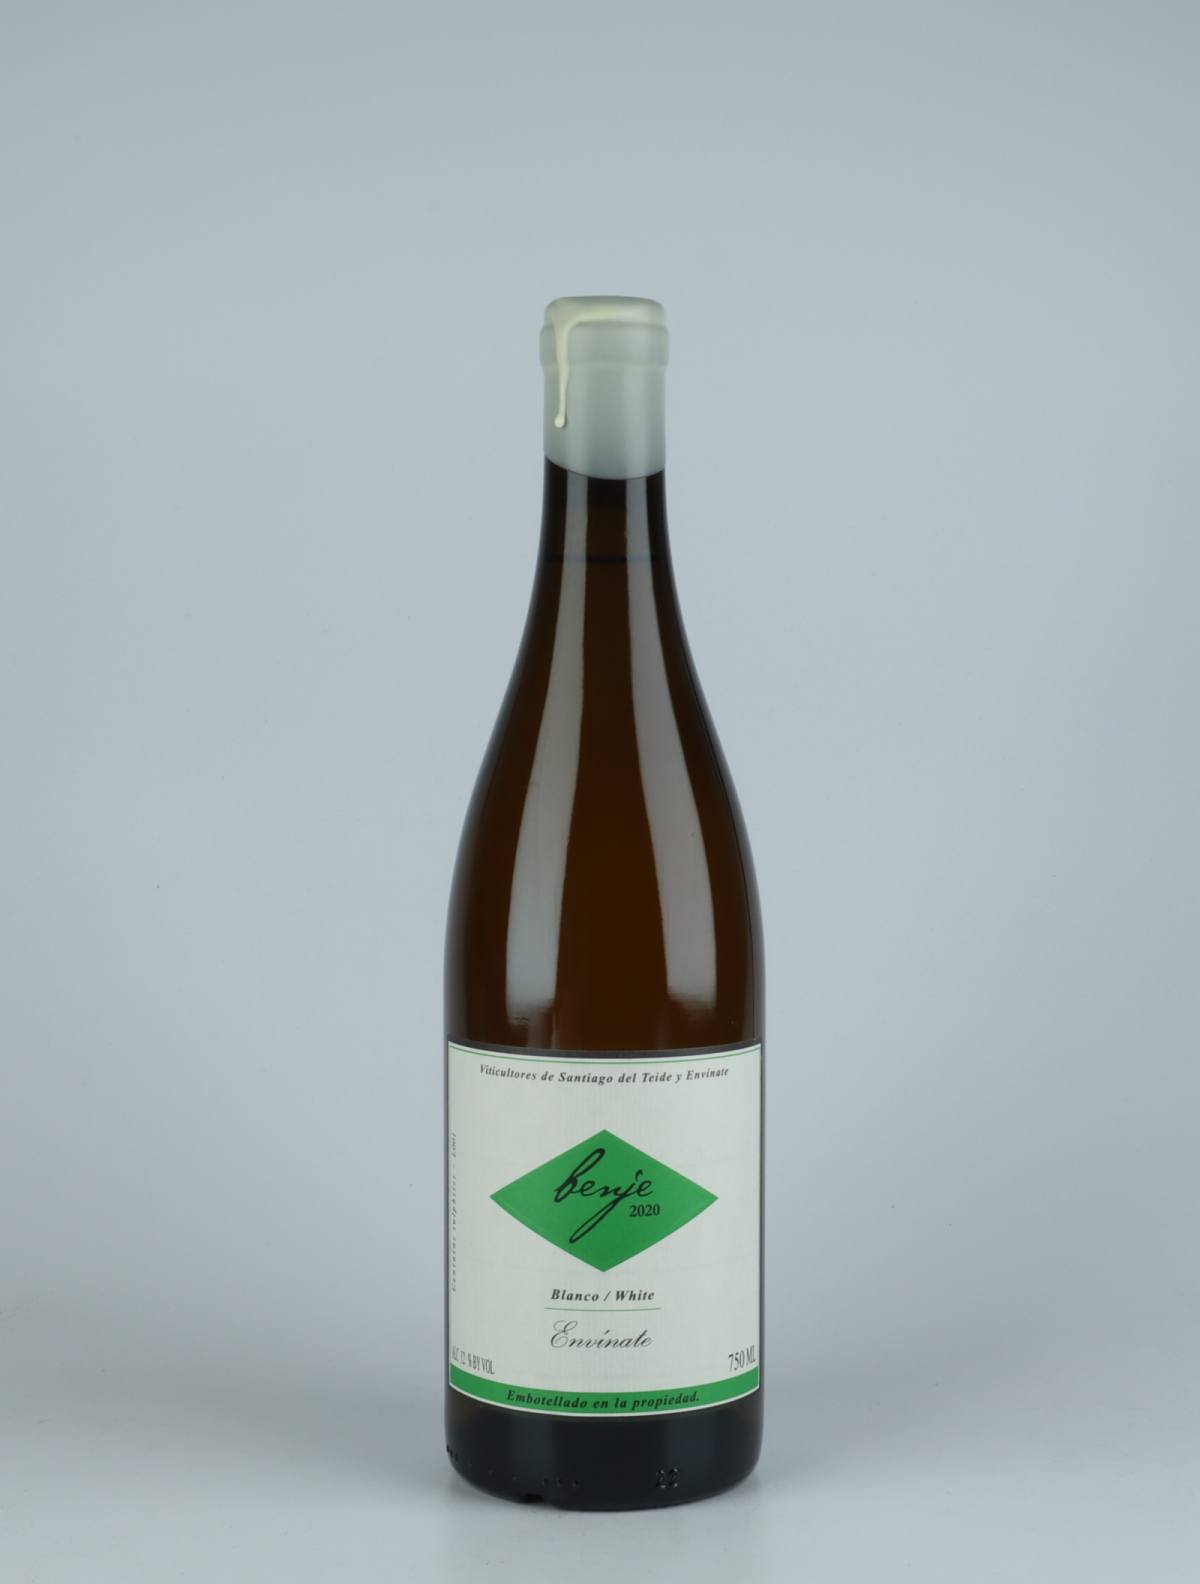 A bottle 2020 Benje Blanco - Tenerife White wine from Envínate,  in Spain